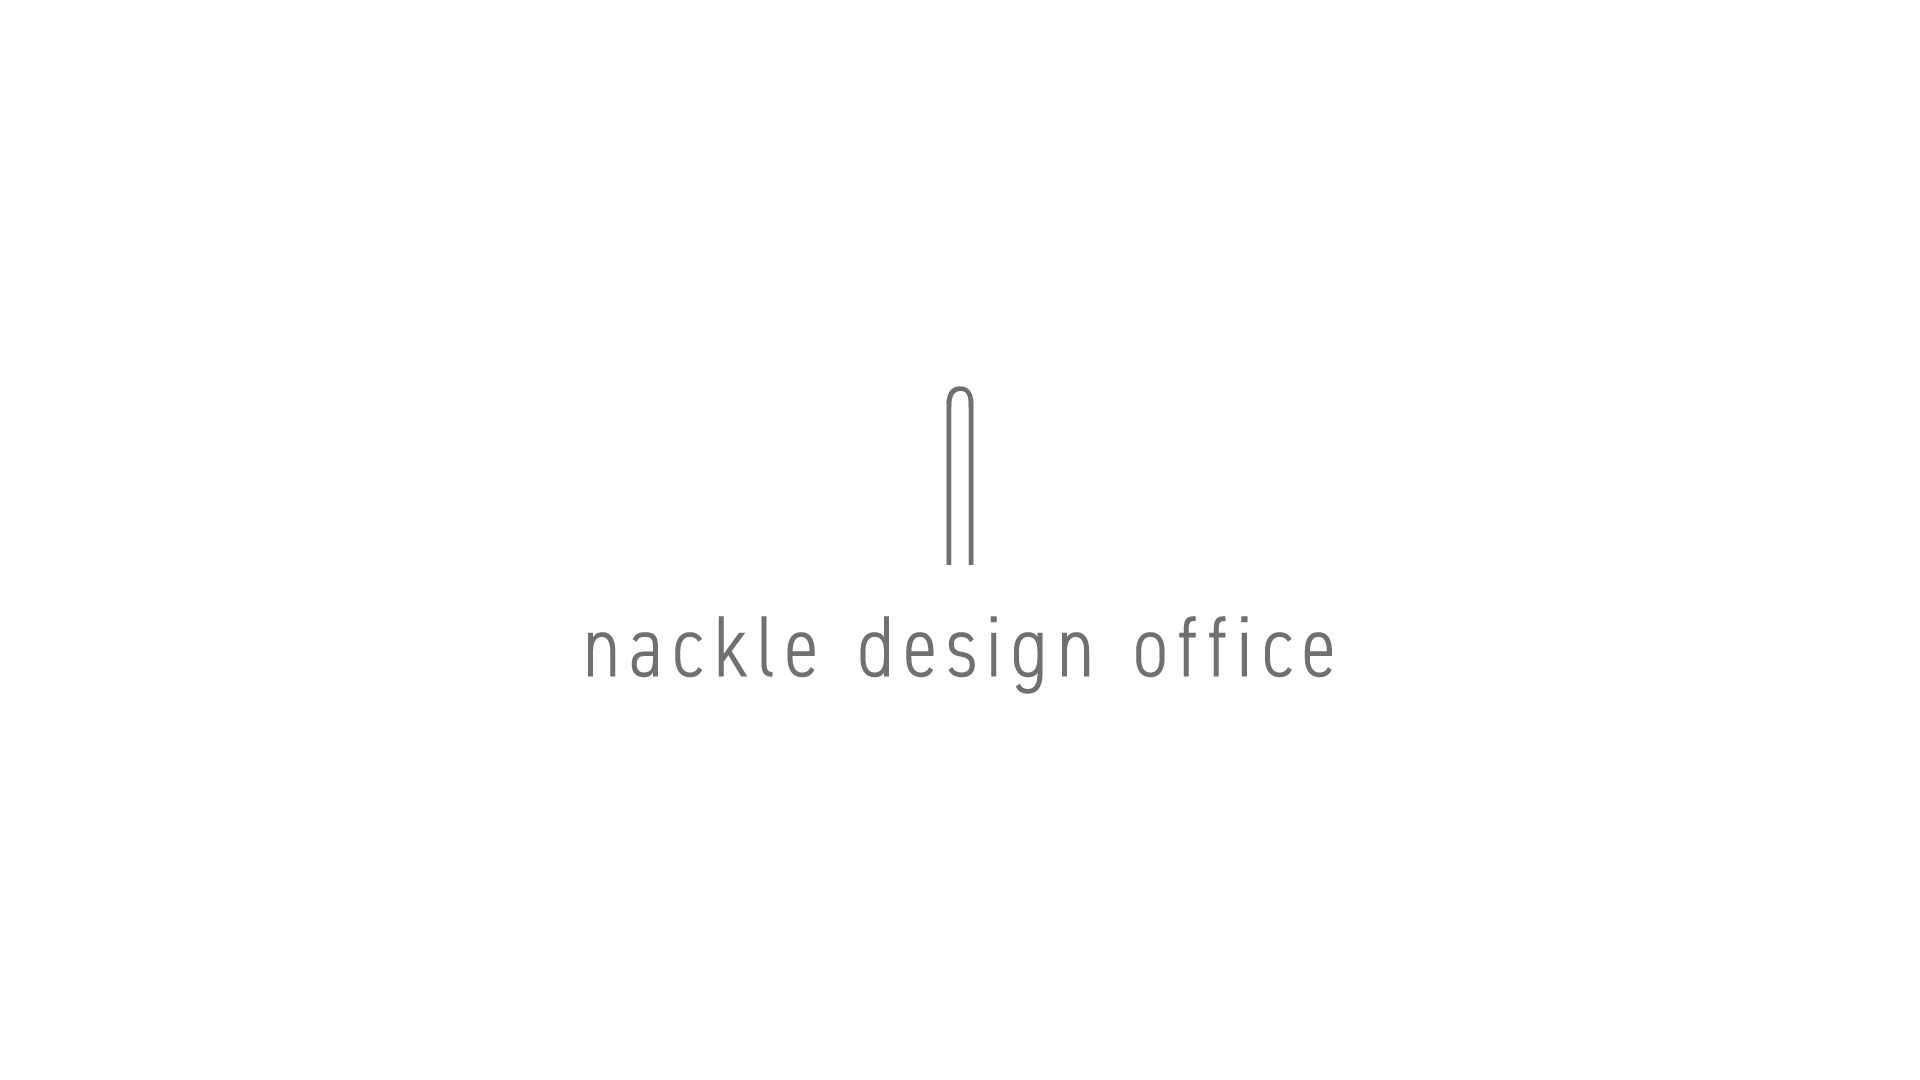 nackle design officeのロゴマーク